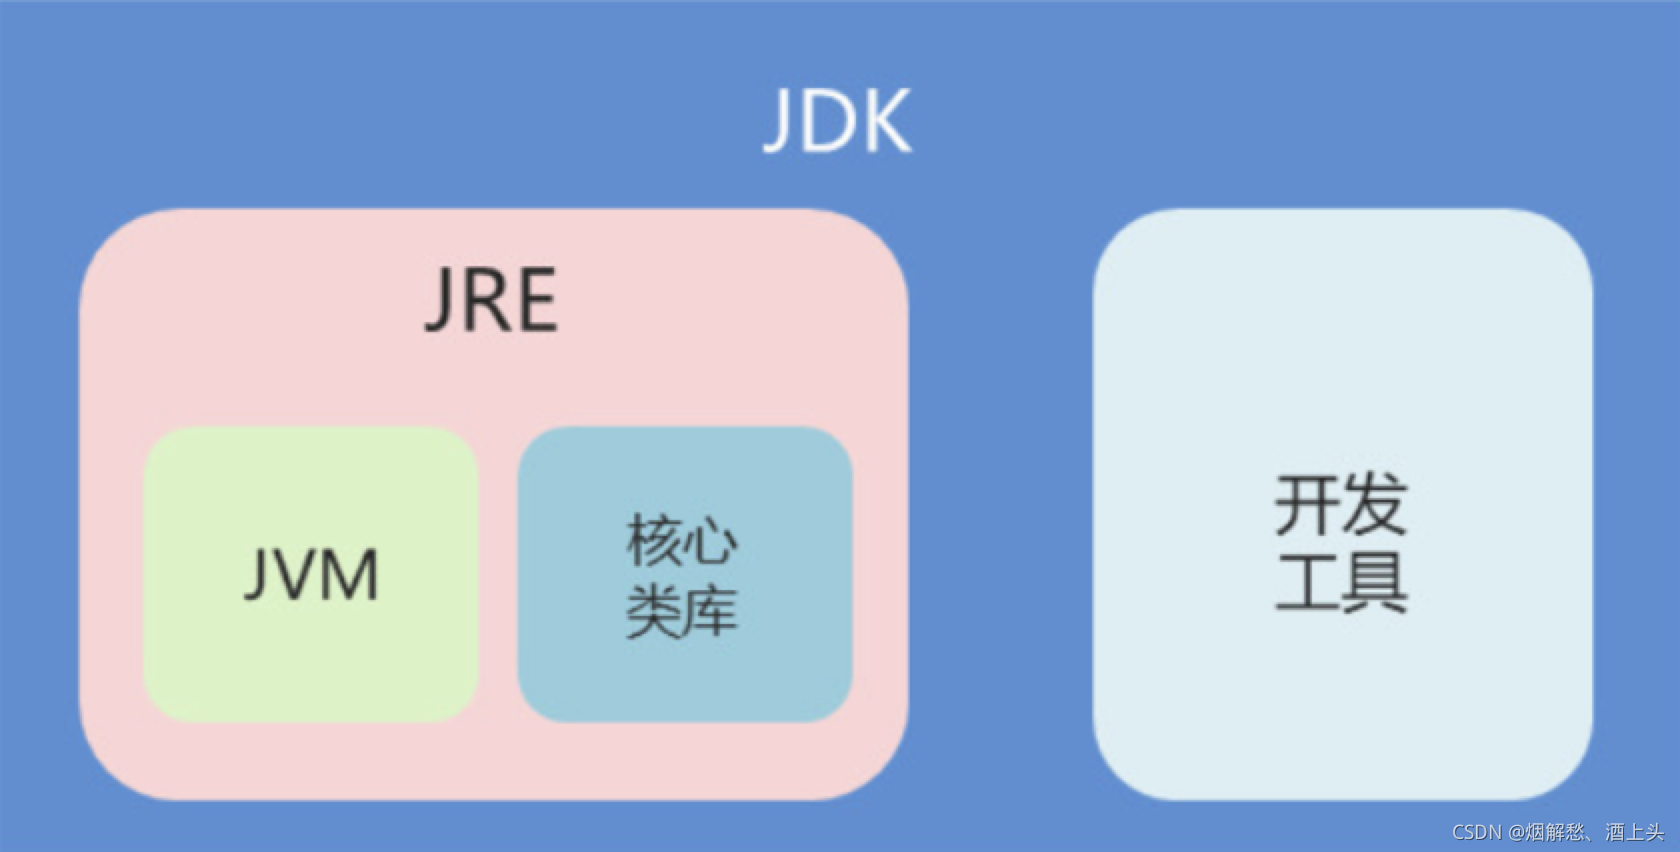 JDK和JRE的图解: